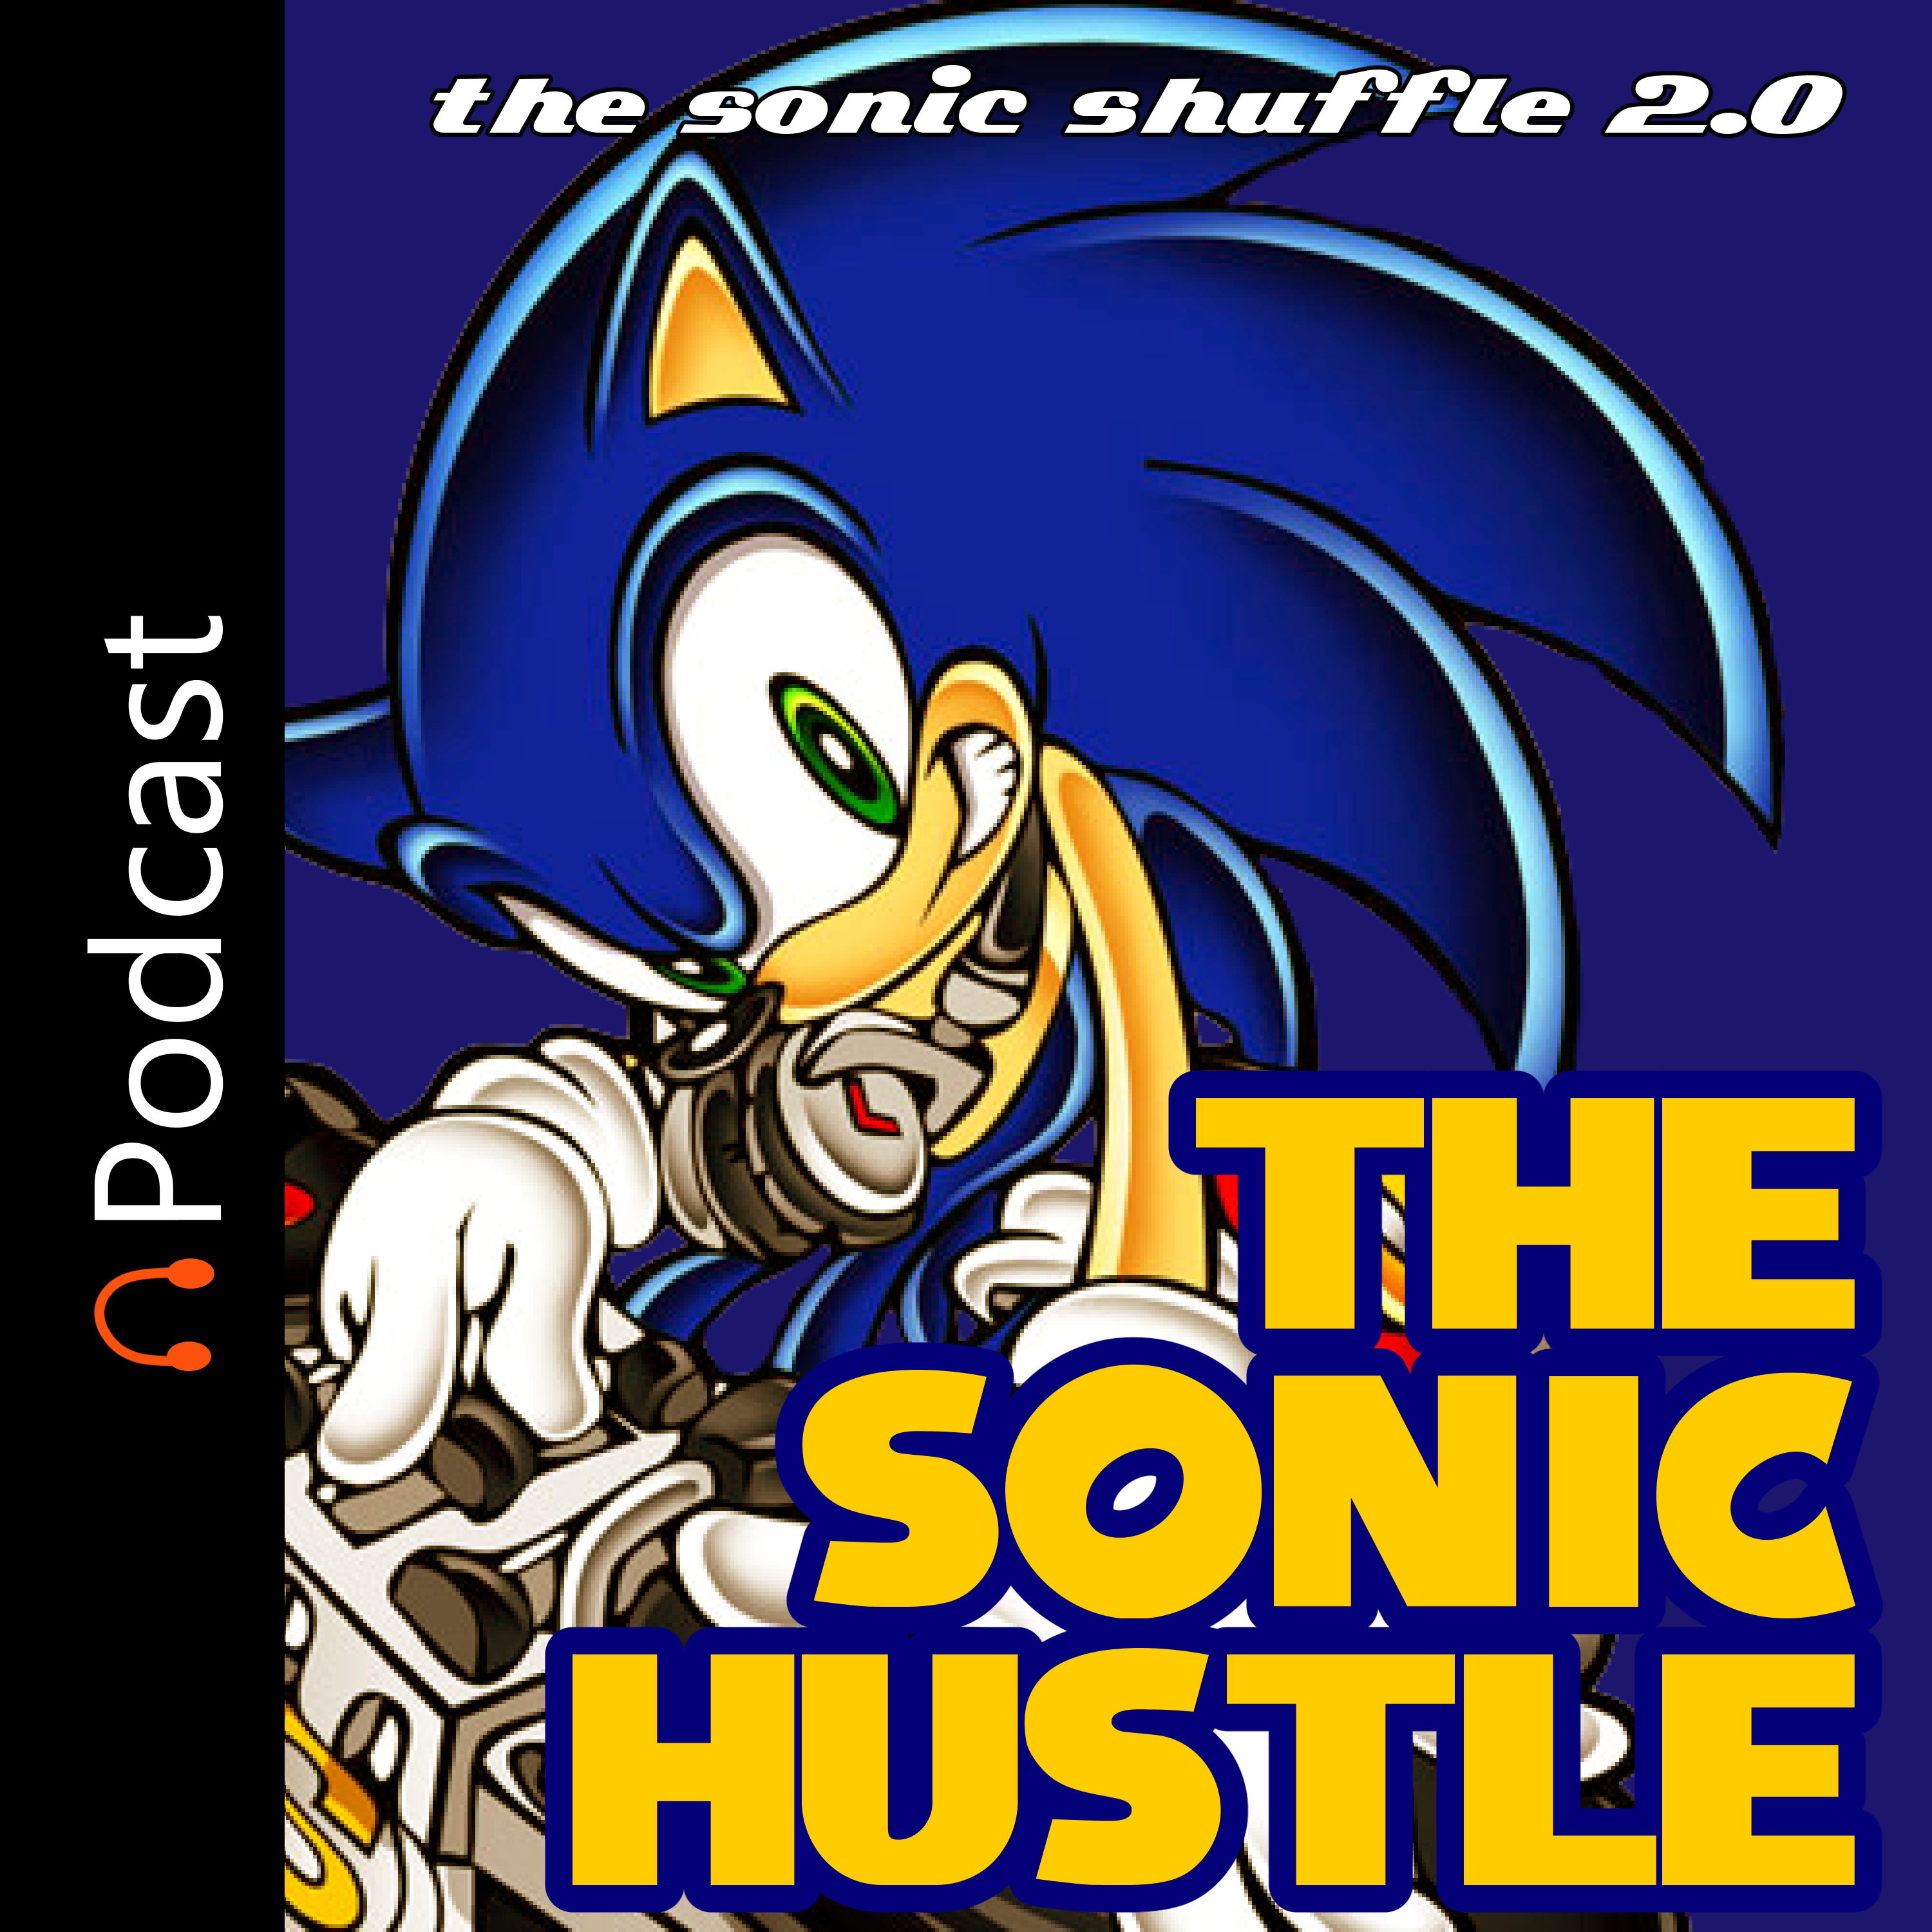 The Sonic Hustle